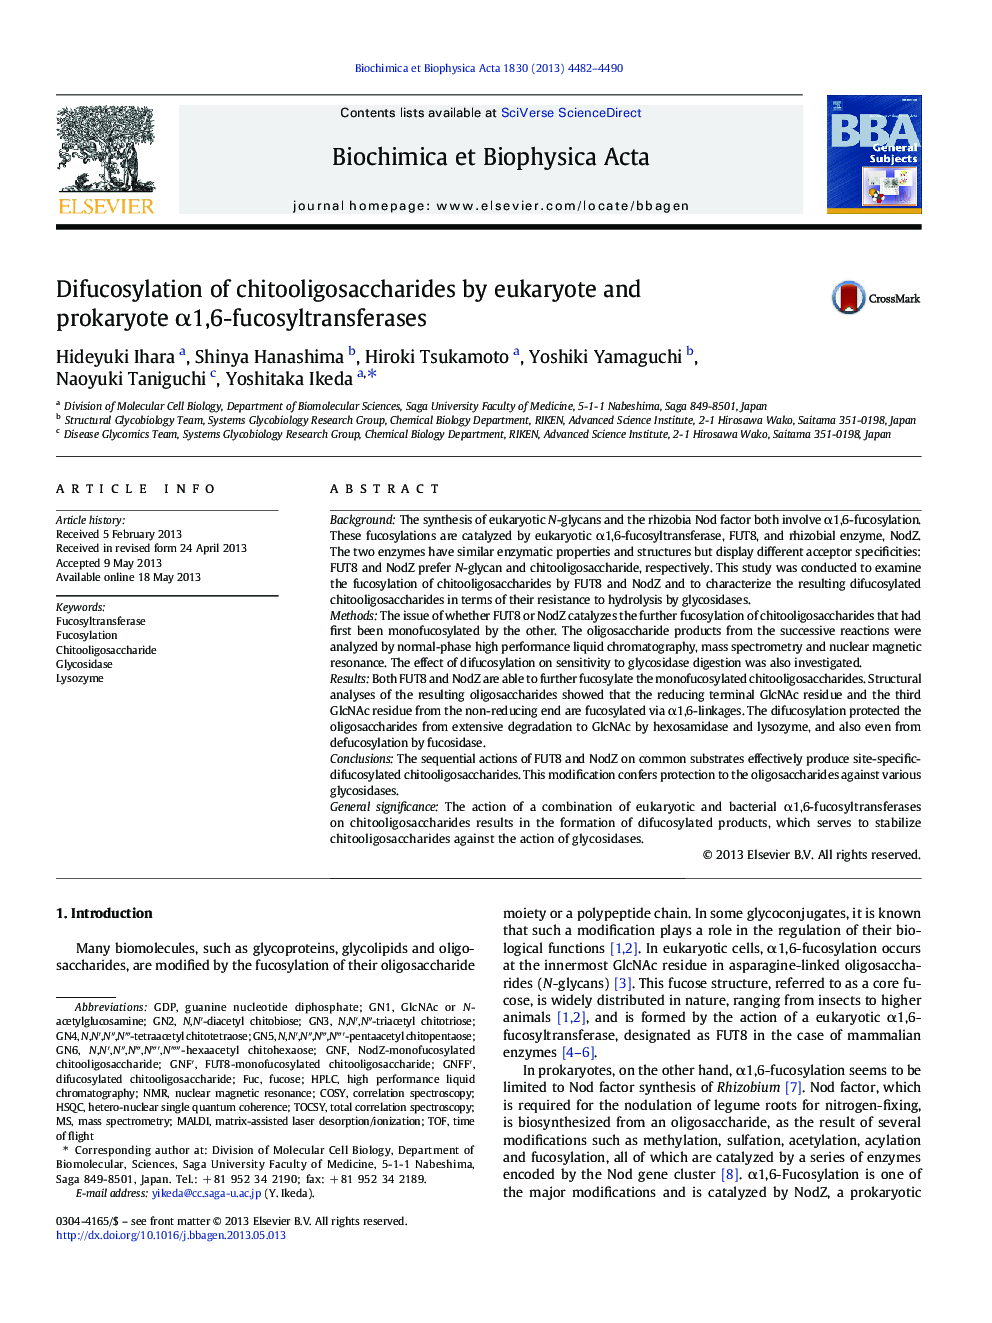 Difucosylation of chitooligosaccharides by eukaryote and prokaryote Î±1,6-fucosyltransferases